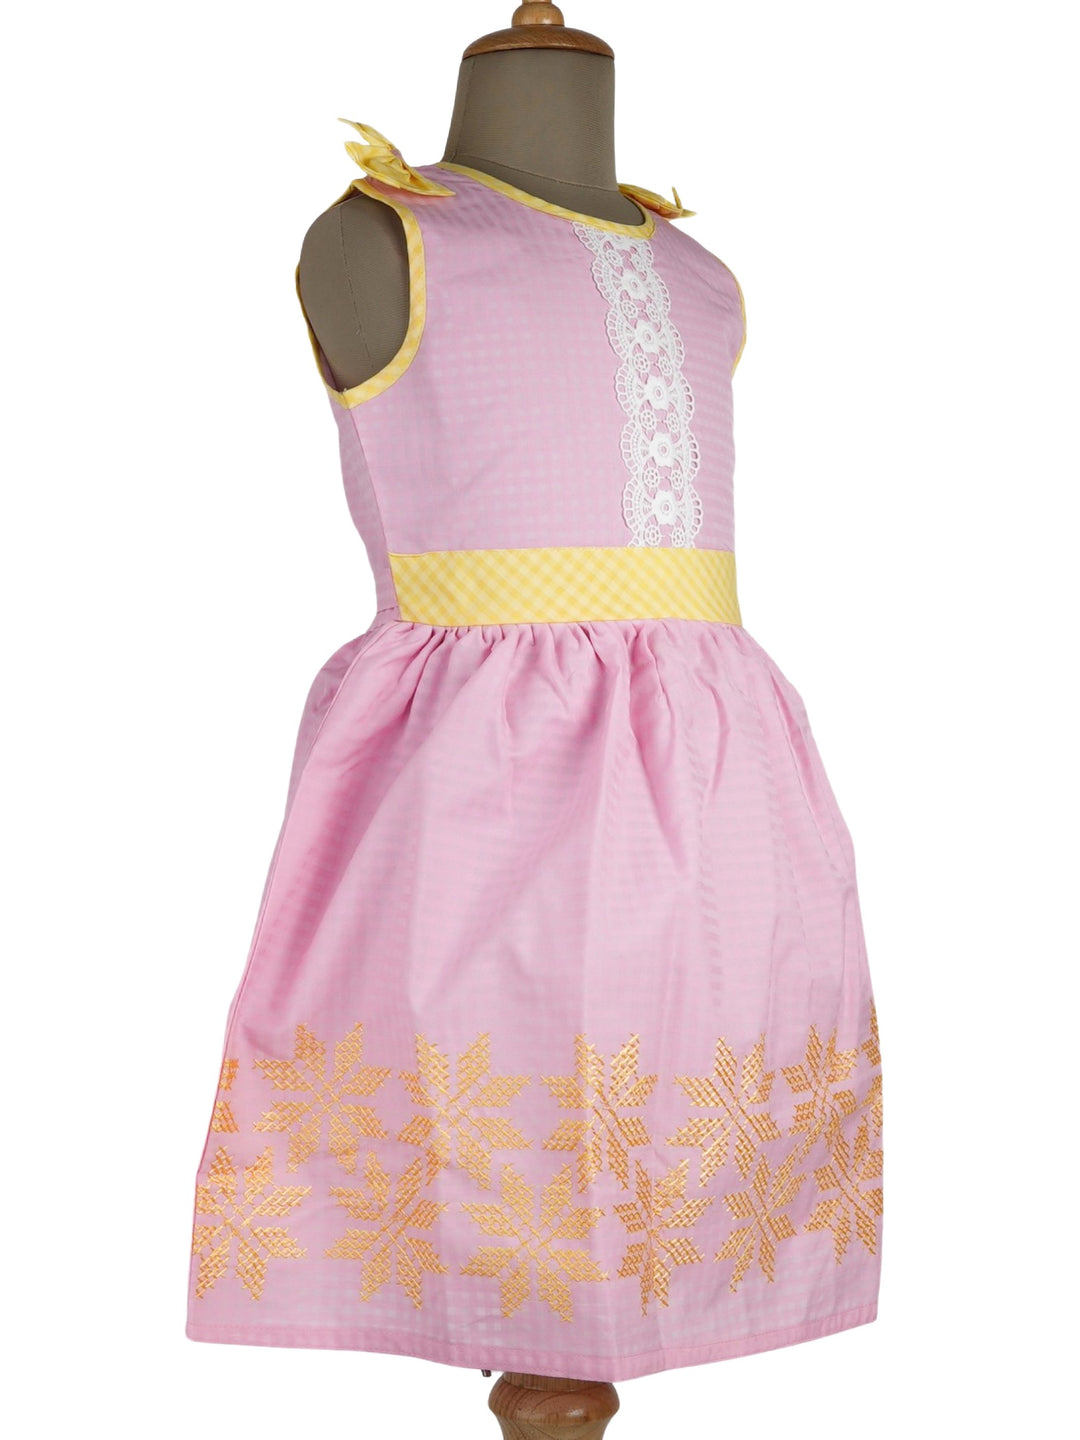 The Nesavu Frocks & Dresses Cute Pink Cotton Dress With Bow And Embellishment psr silks Nesavu